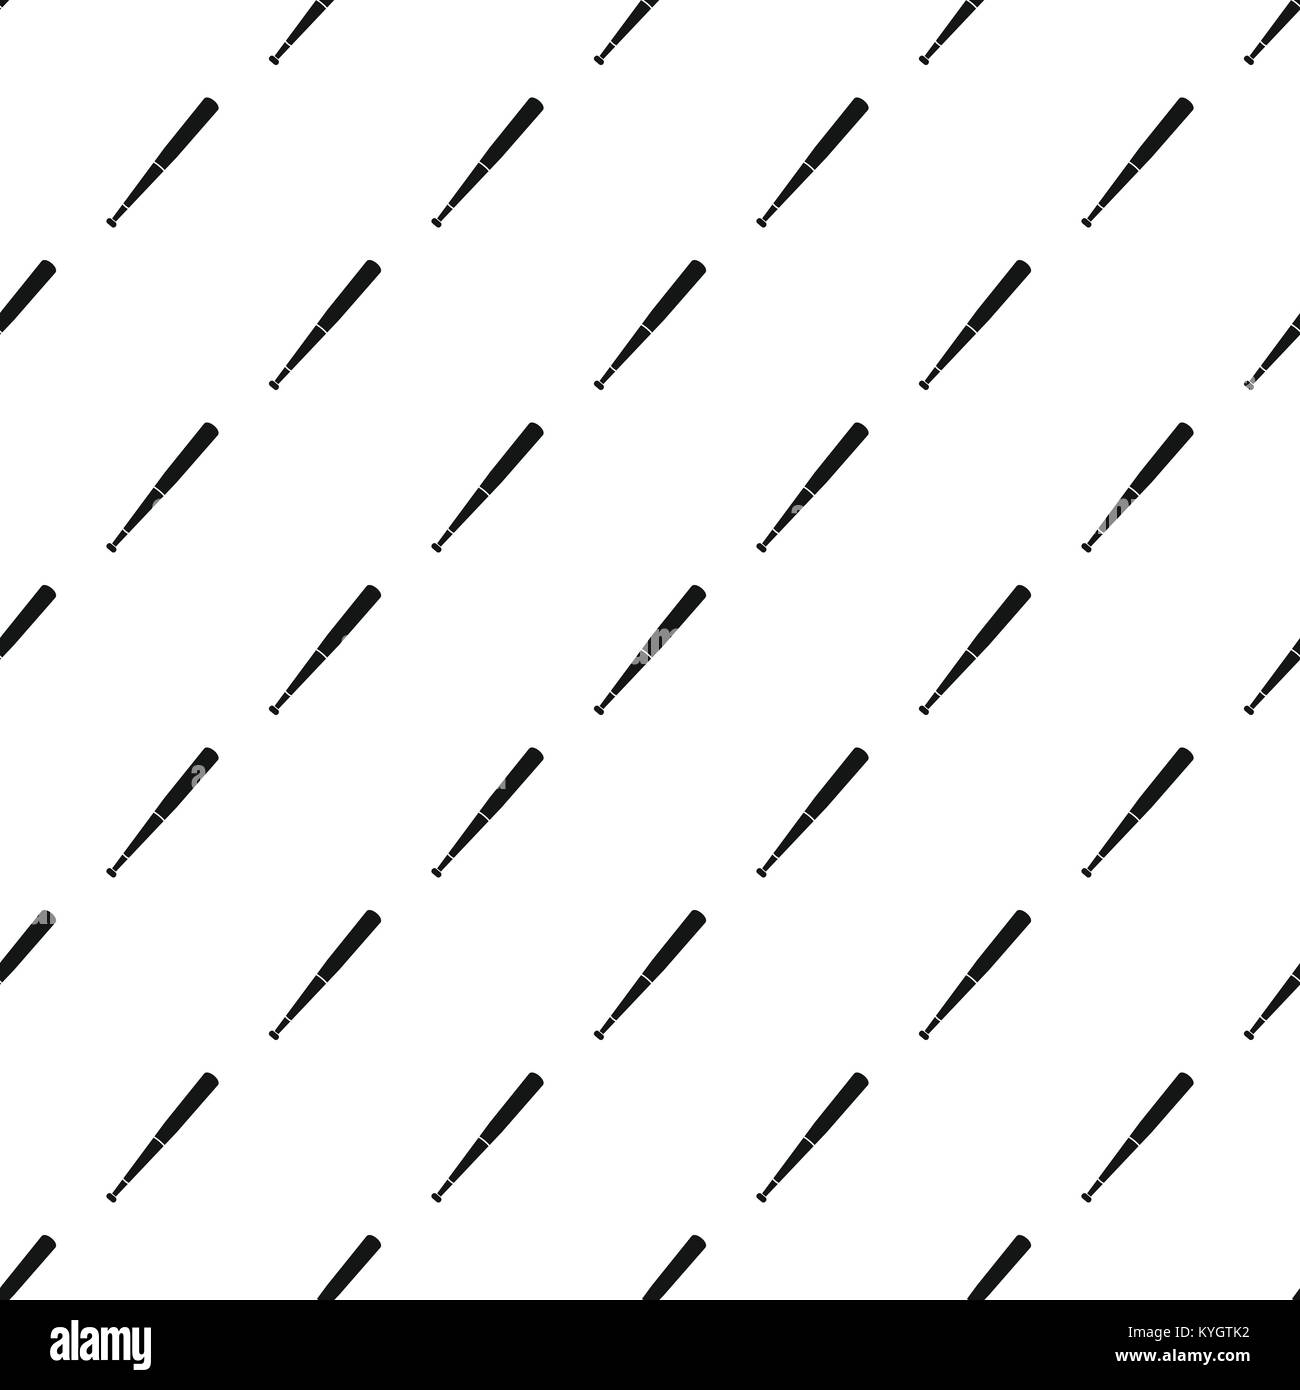 Black baseball bat pattern vector Stock Vector Image & Art - Alamy